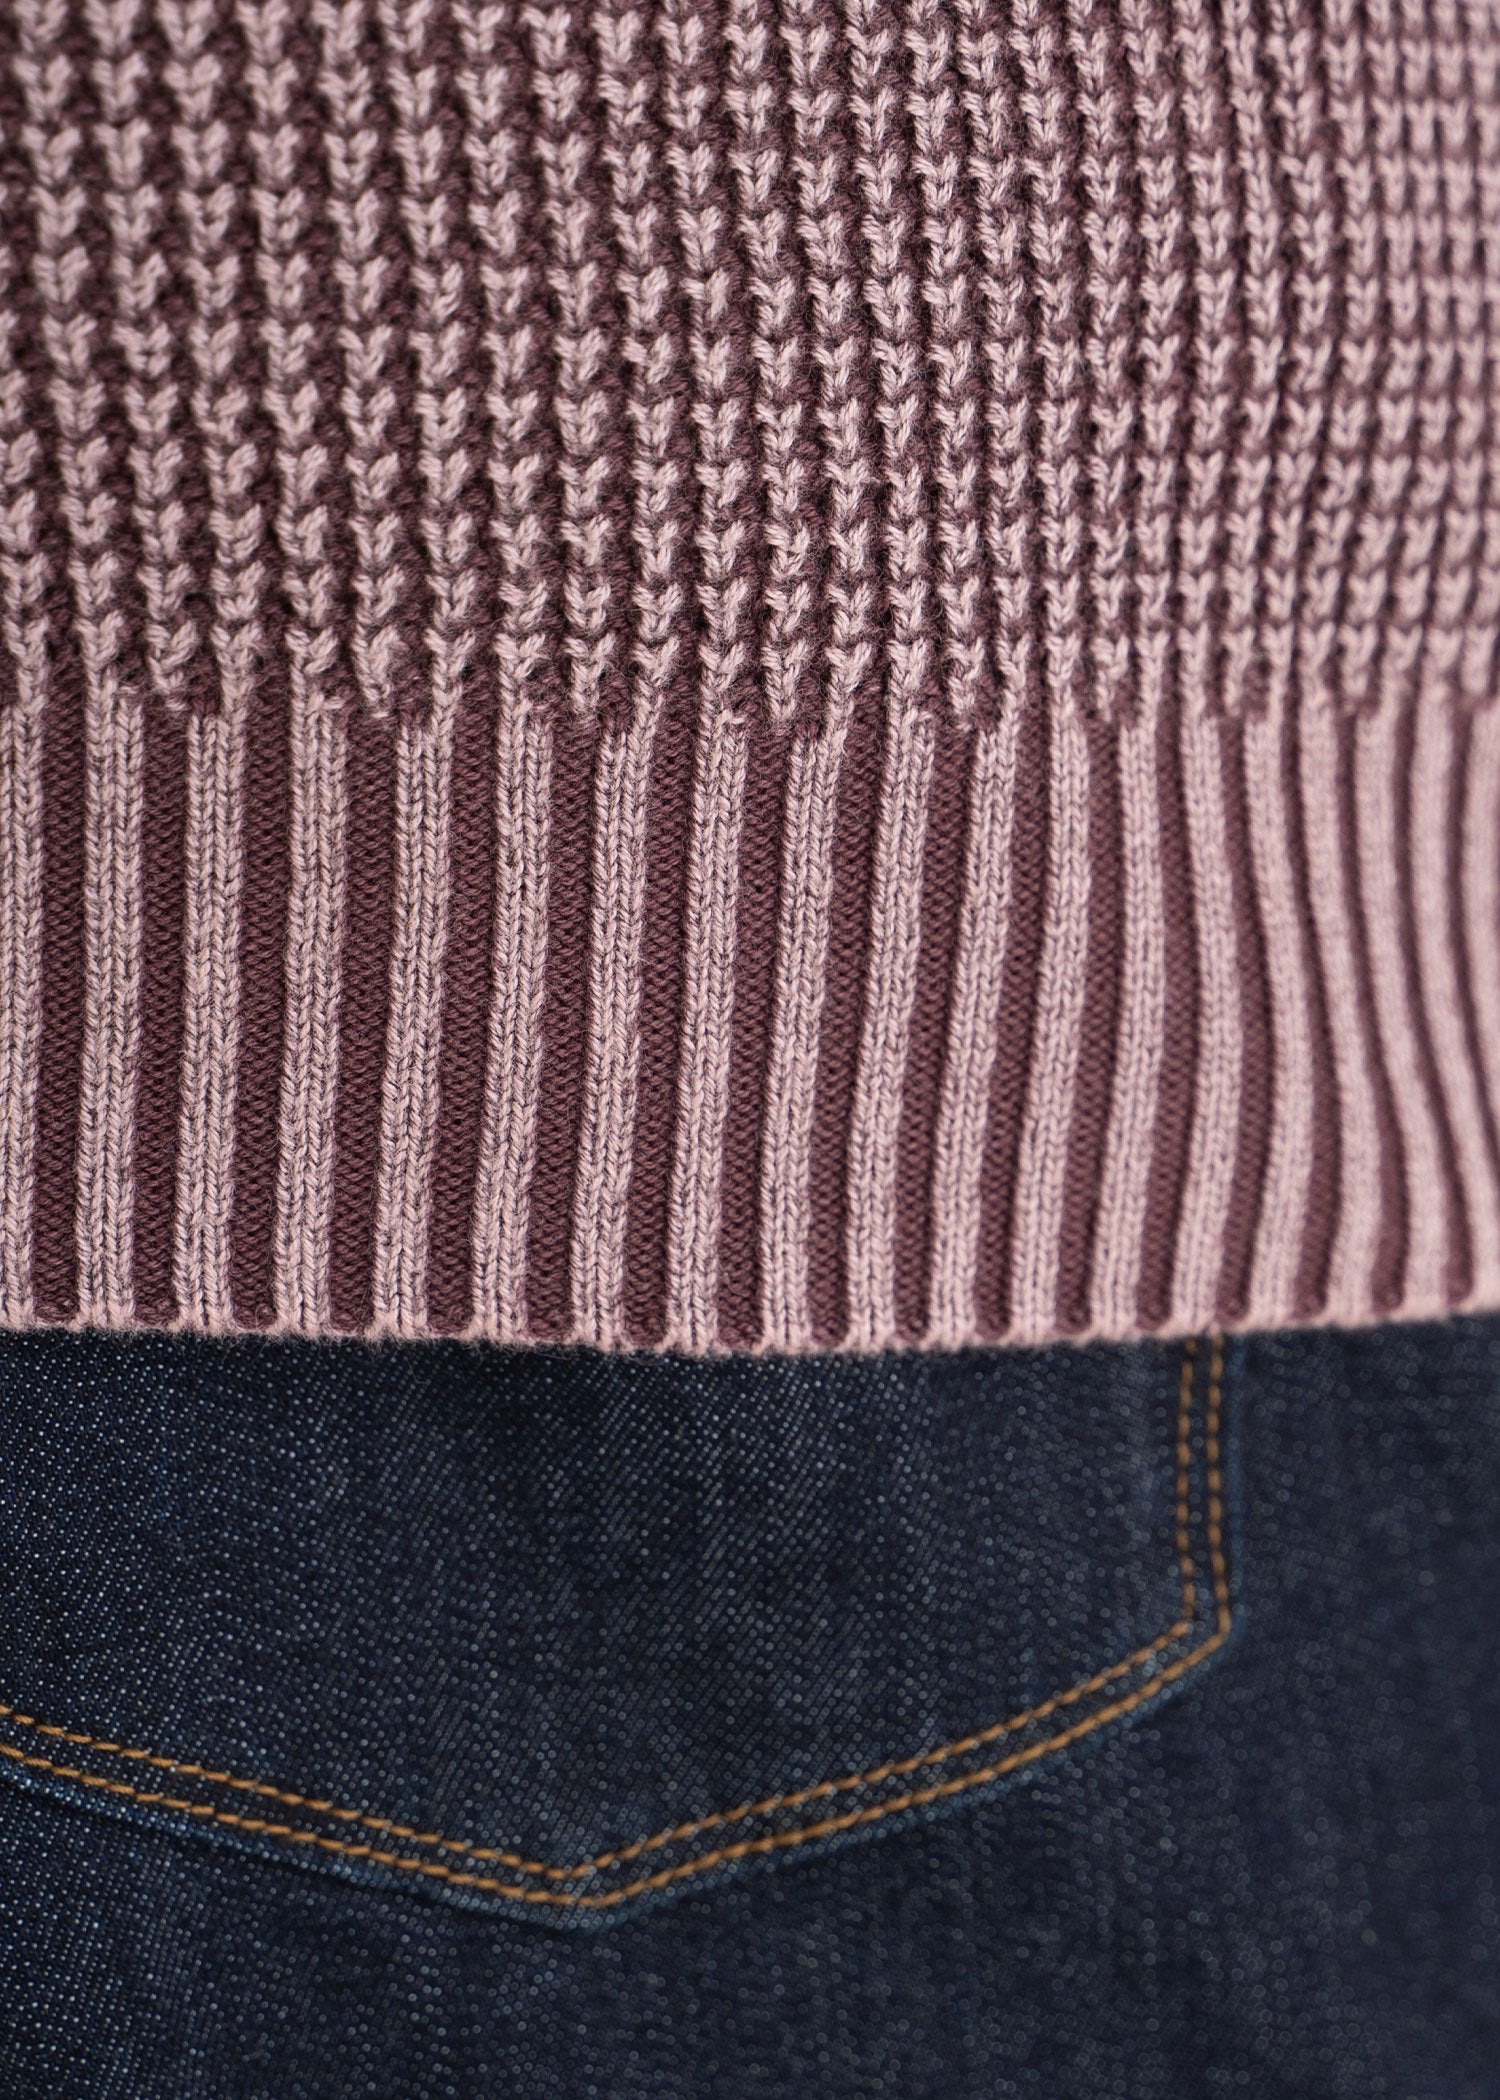 americantall-acidwash-knitsweater-maroon-detail